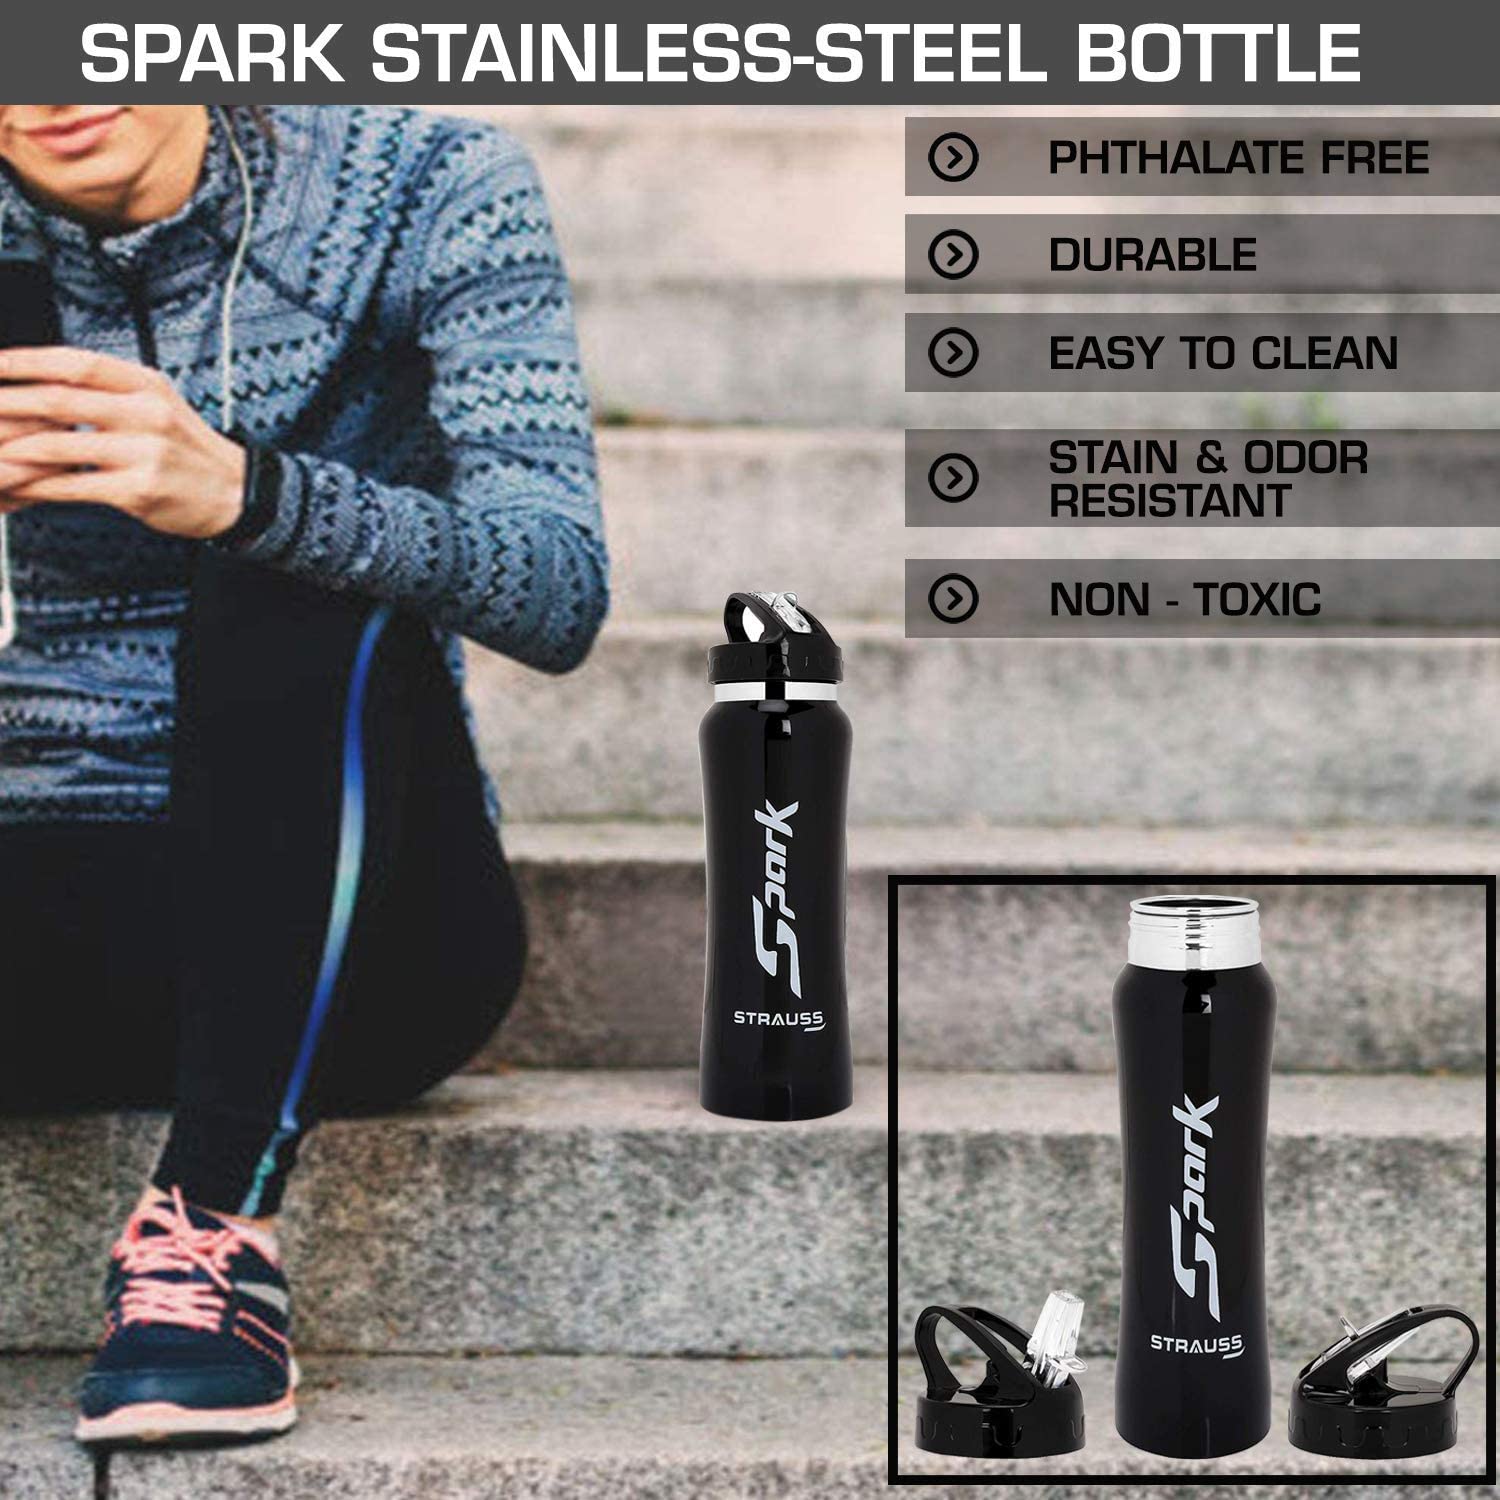 STRAUSS Spark Stainless-Steel Bottle, Metal Finish, 750 ml, (Black)